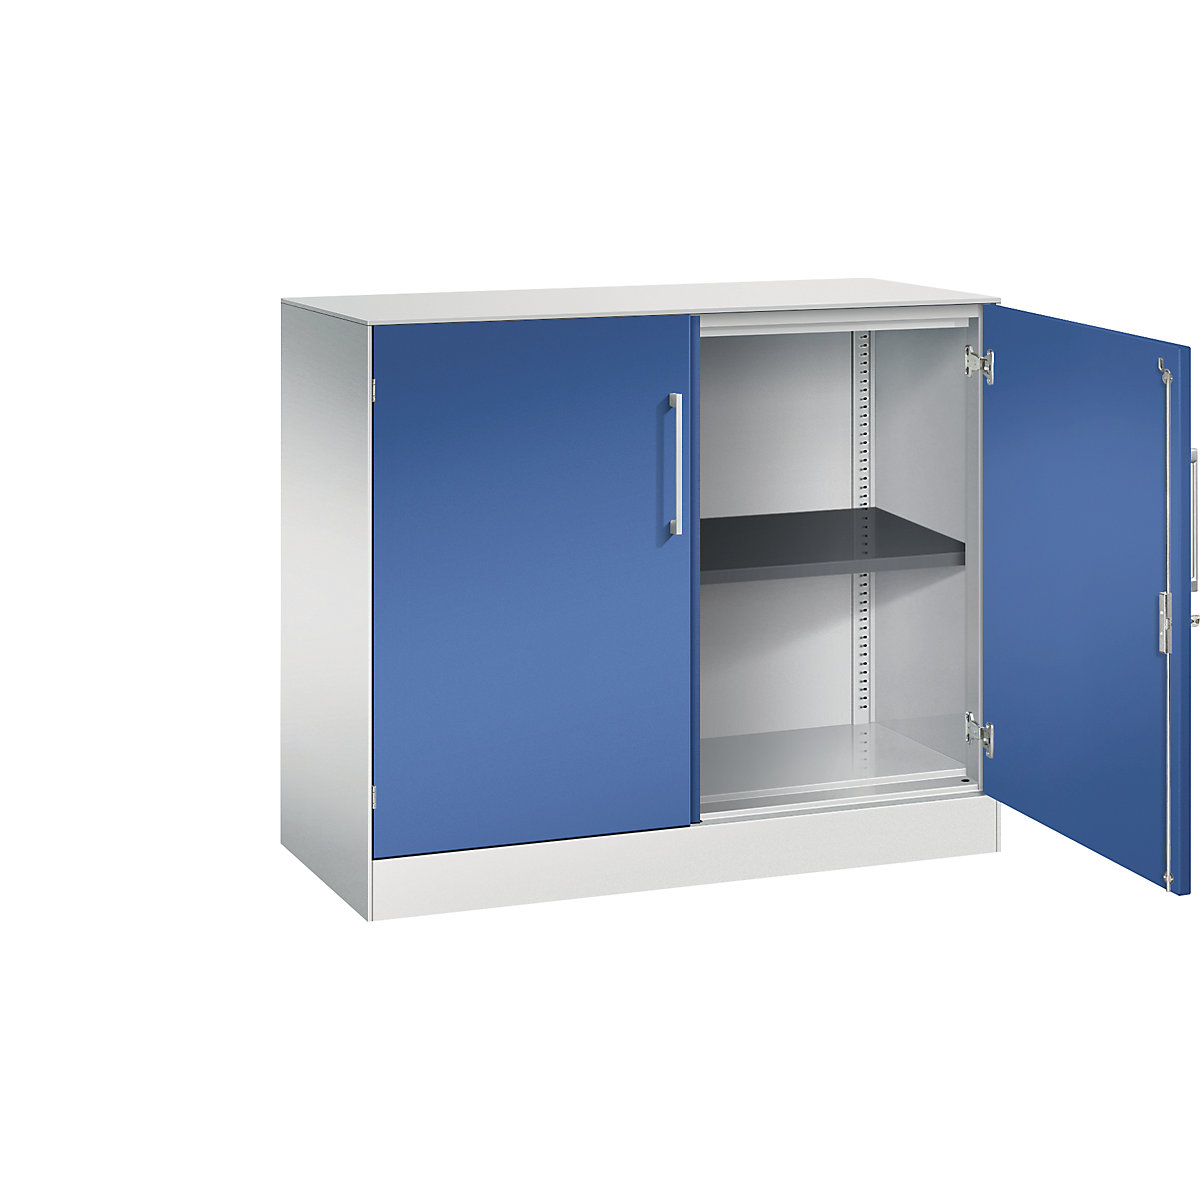 C+P – Skříň s otočnými dveřmi ASISTO, výška 897 mm, šířka 1000 mm, 1 police, světlá šedá/enciánová modrá